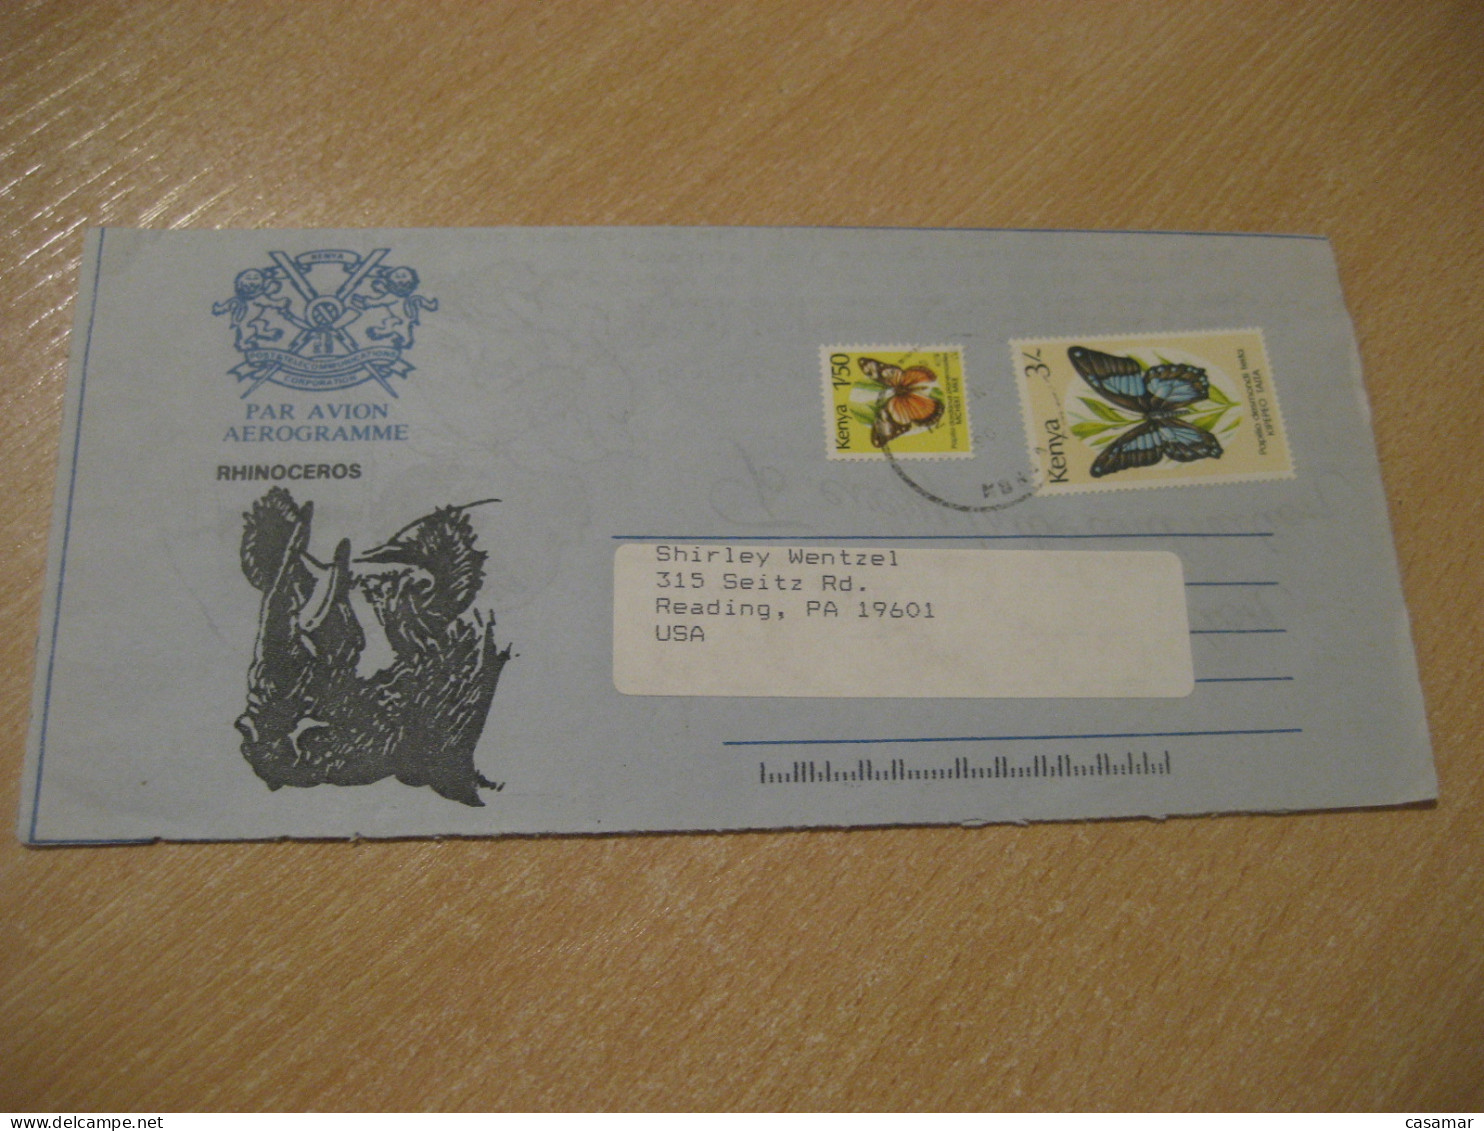 KIJABE 1990 Rhinoceros Rhino Cancel Aerogramme Air Letter KENYA Butterfly Stamps - Rhinoceros